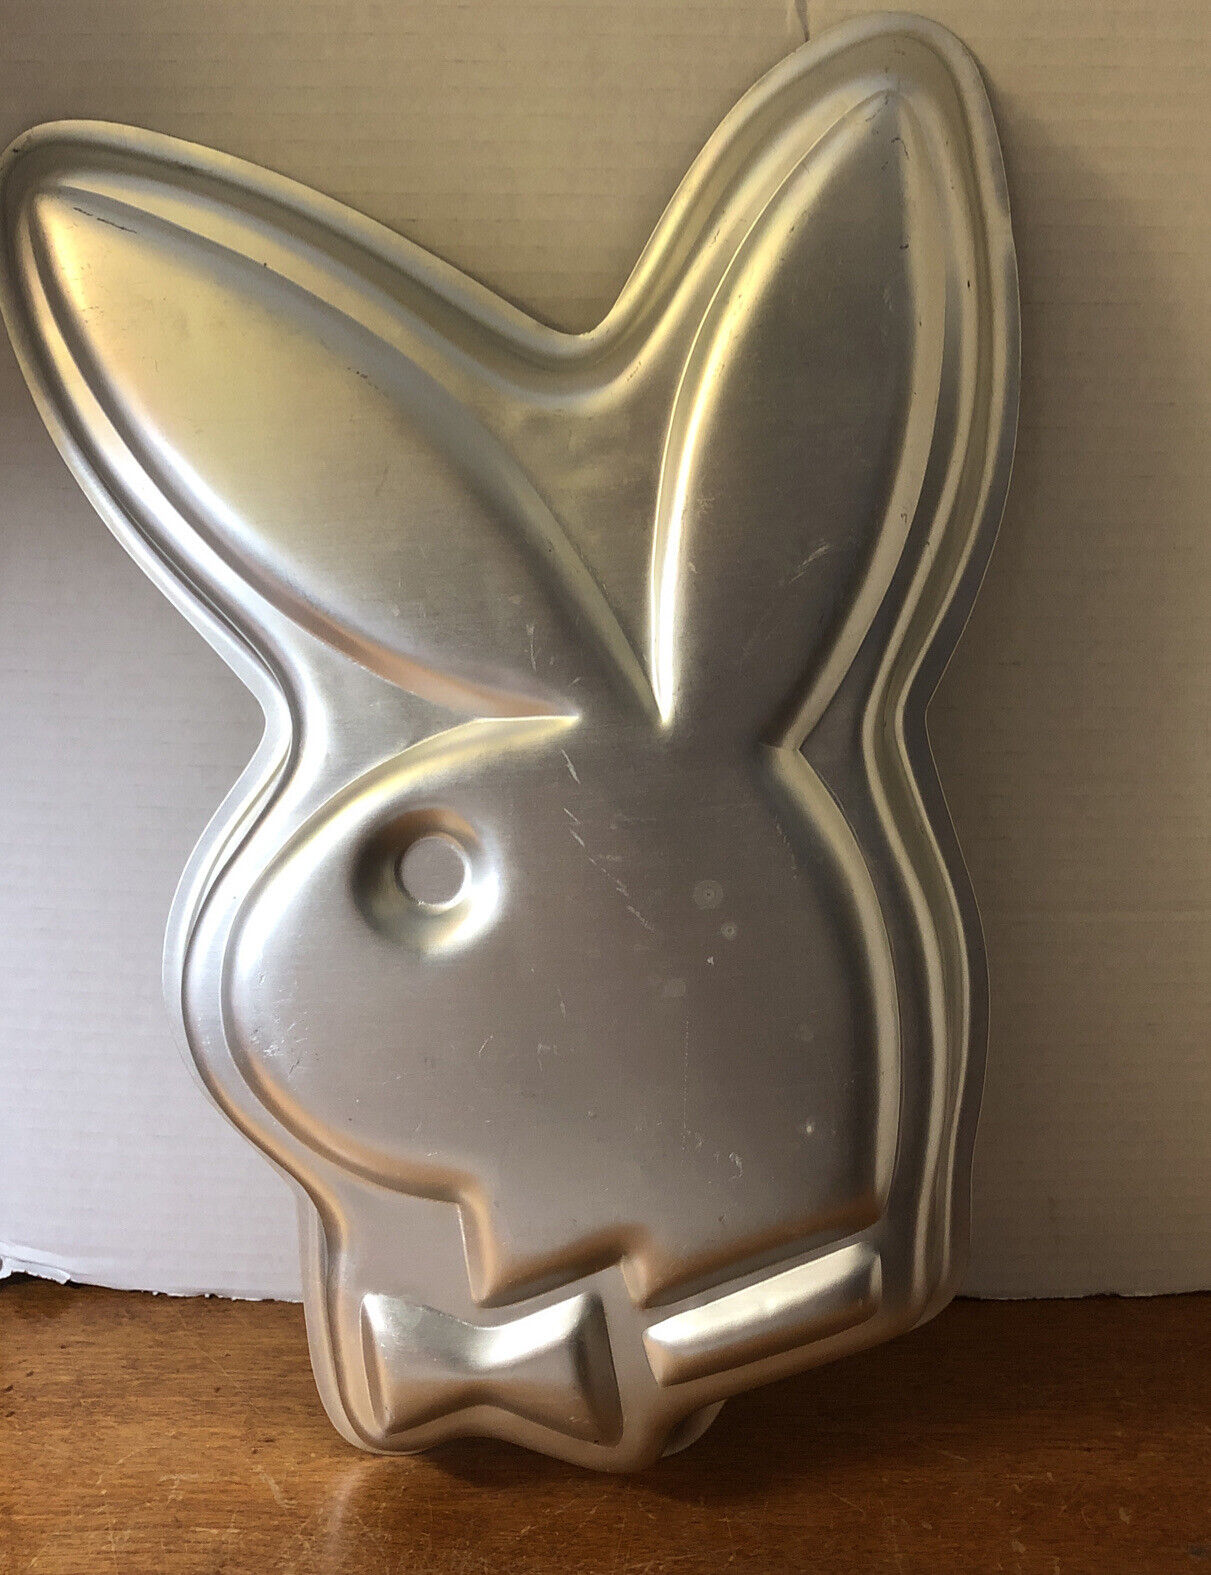 Wilton Playboy Bunny Aluminum Cake Pan - #502-2944 Preowned But Seems Unused